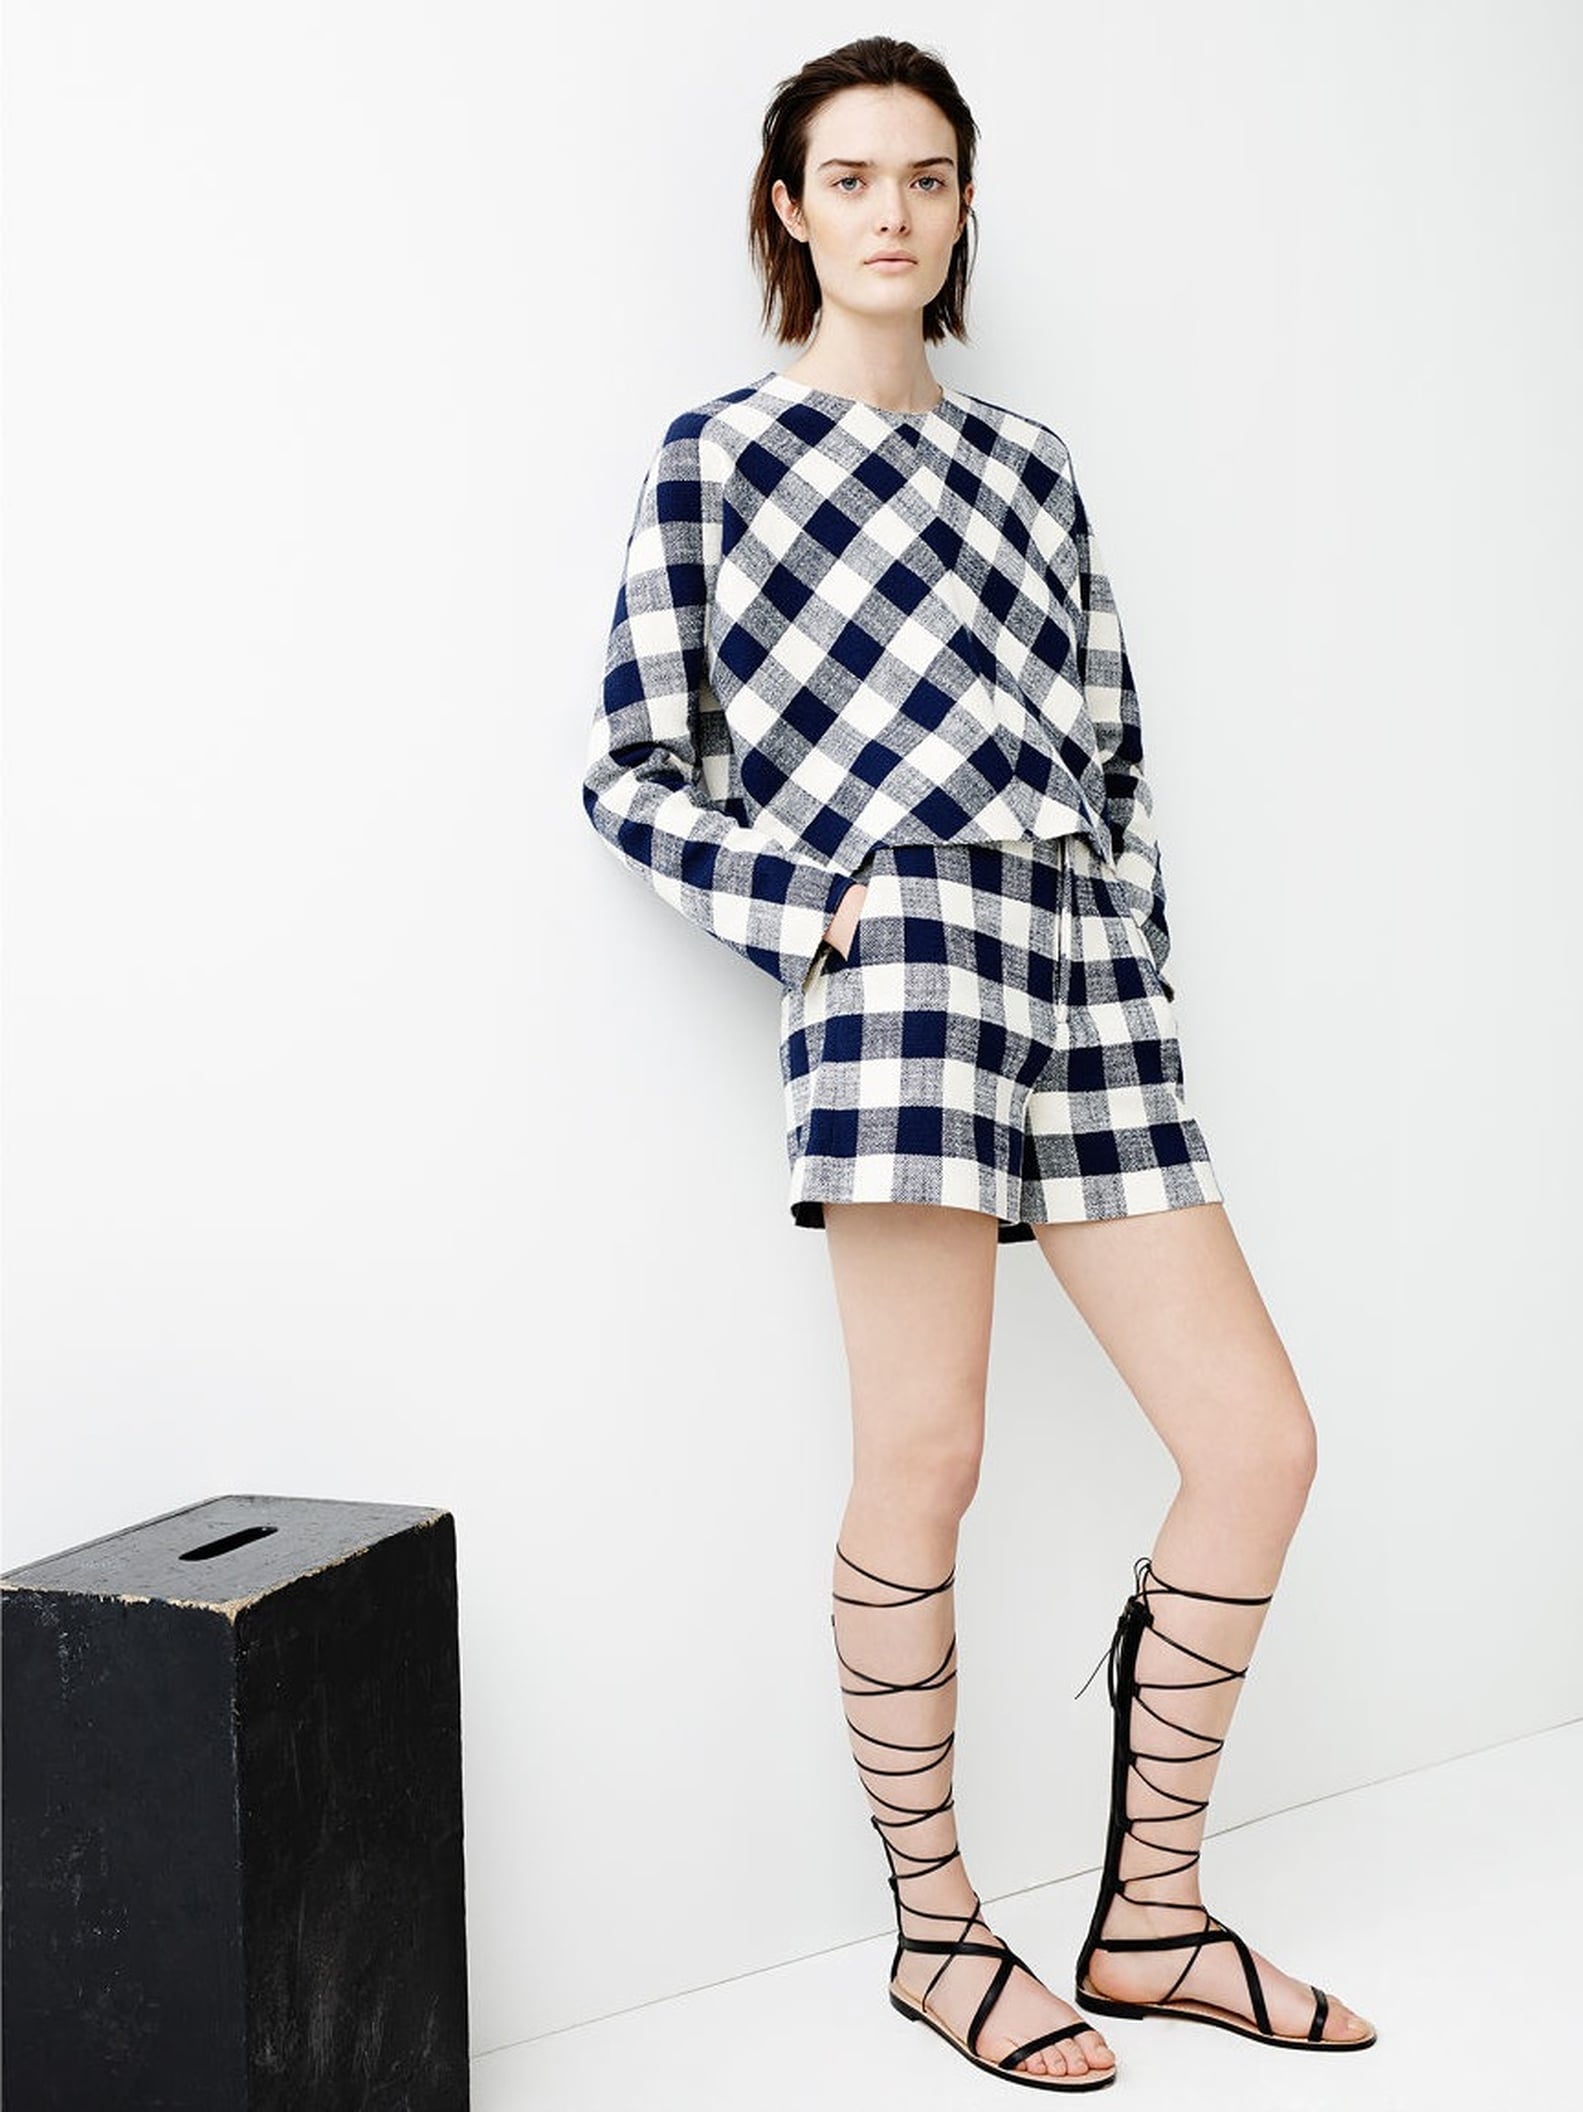 Zara Spring 2015 Lookbook | POPSUGAR Fashion